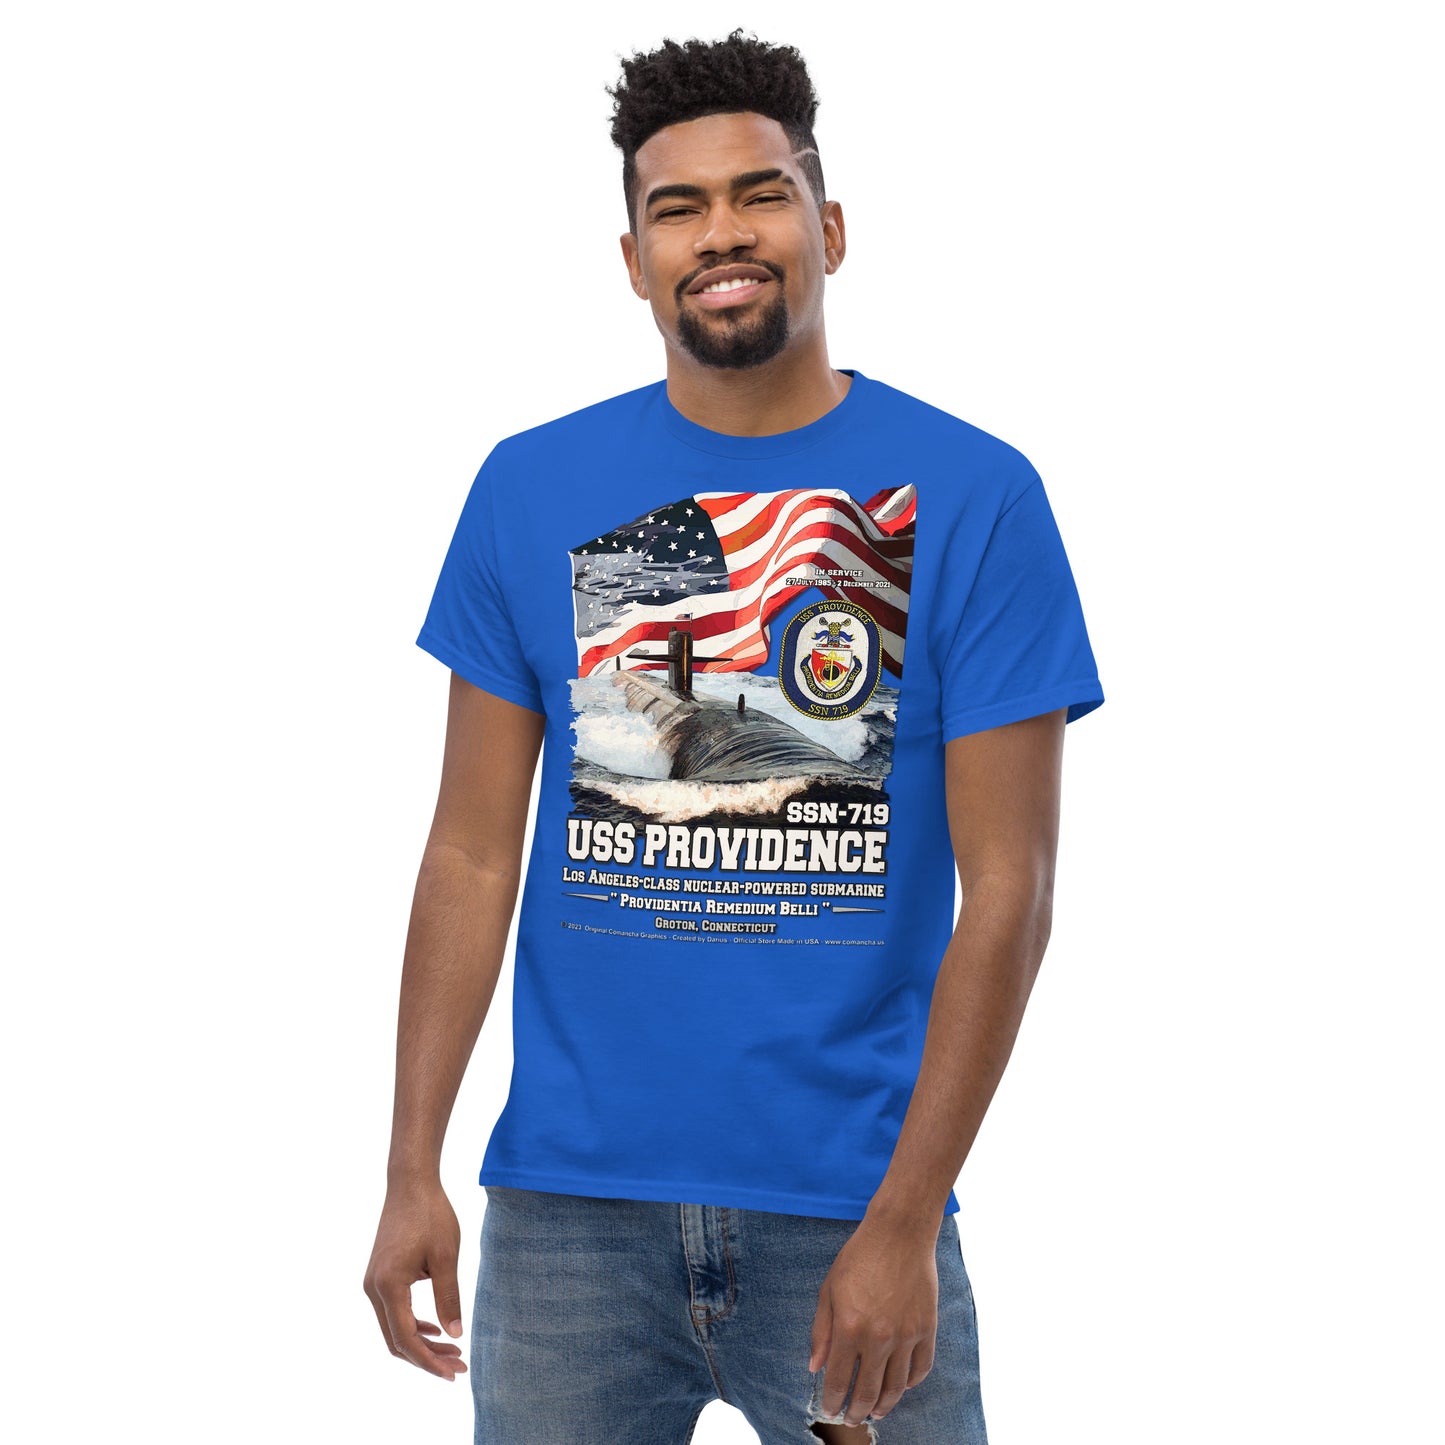 USS PROVIDENCE SSN-719 Submarine Veterans Classic T-Shirt, Comancha Submarine Veterans T-shirts,